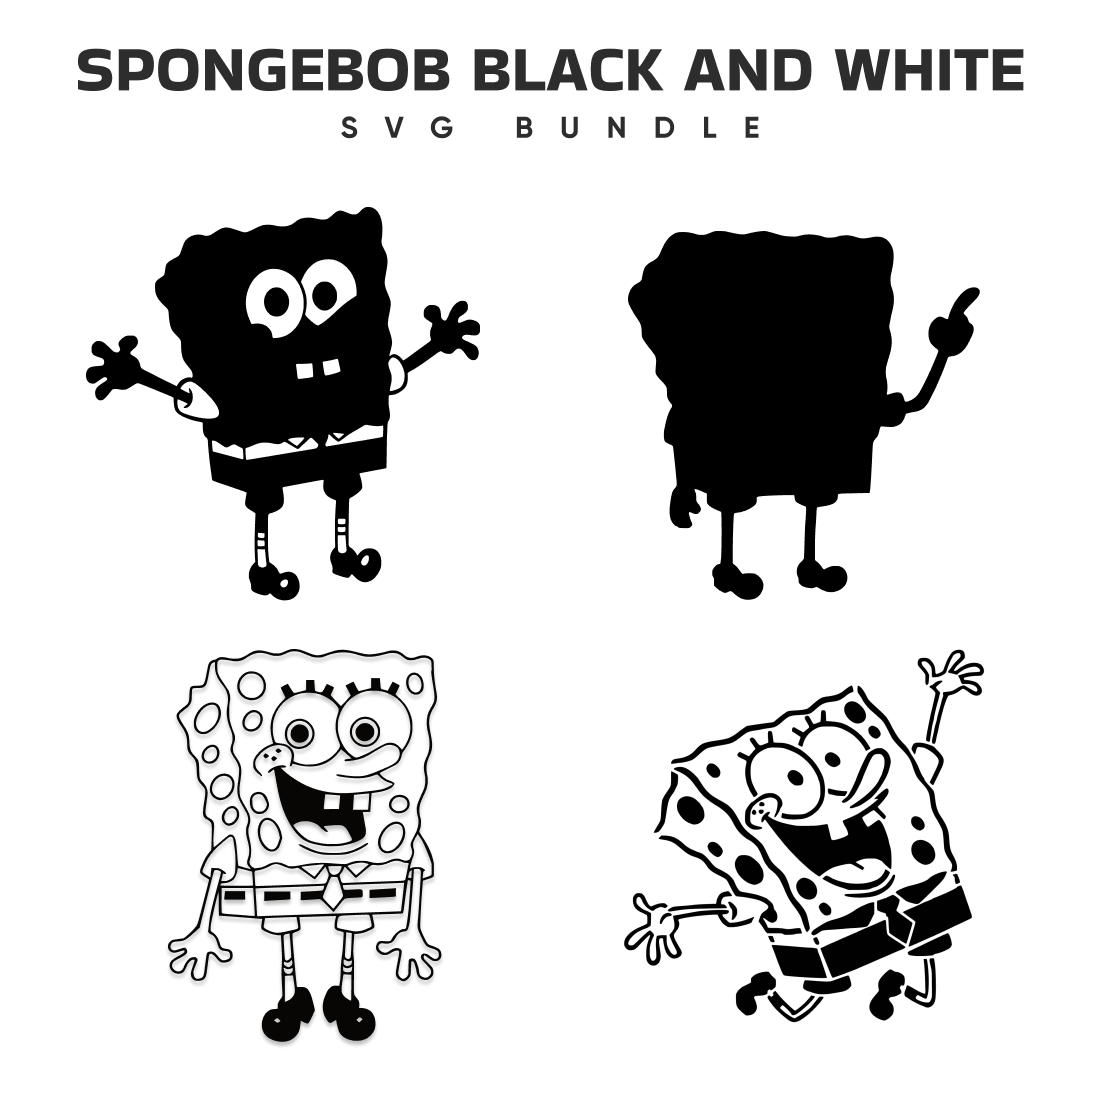 spongebob black and white svg.